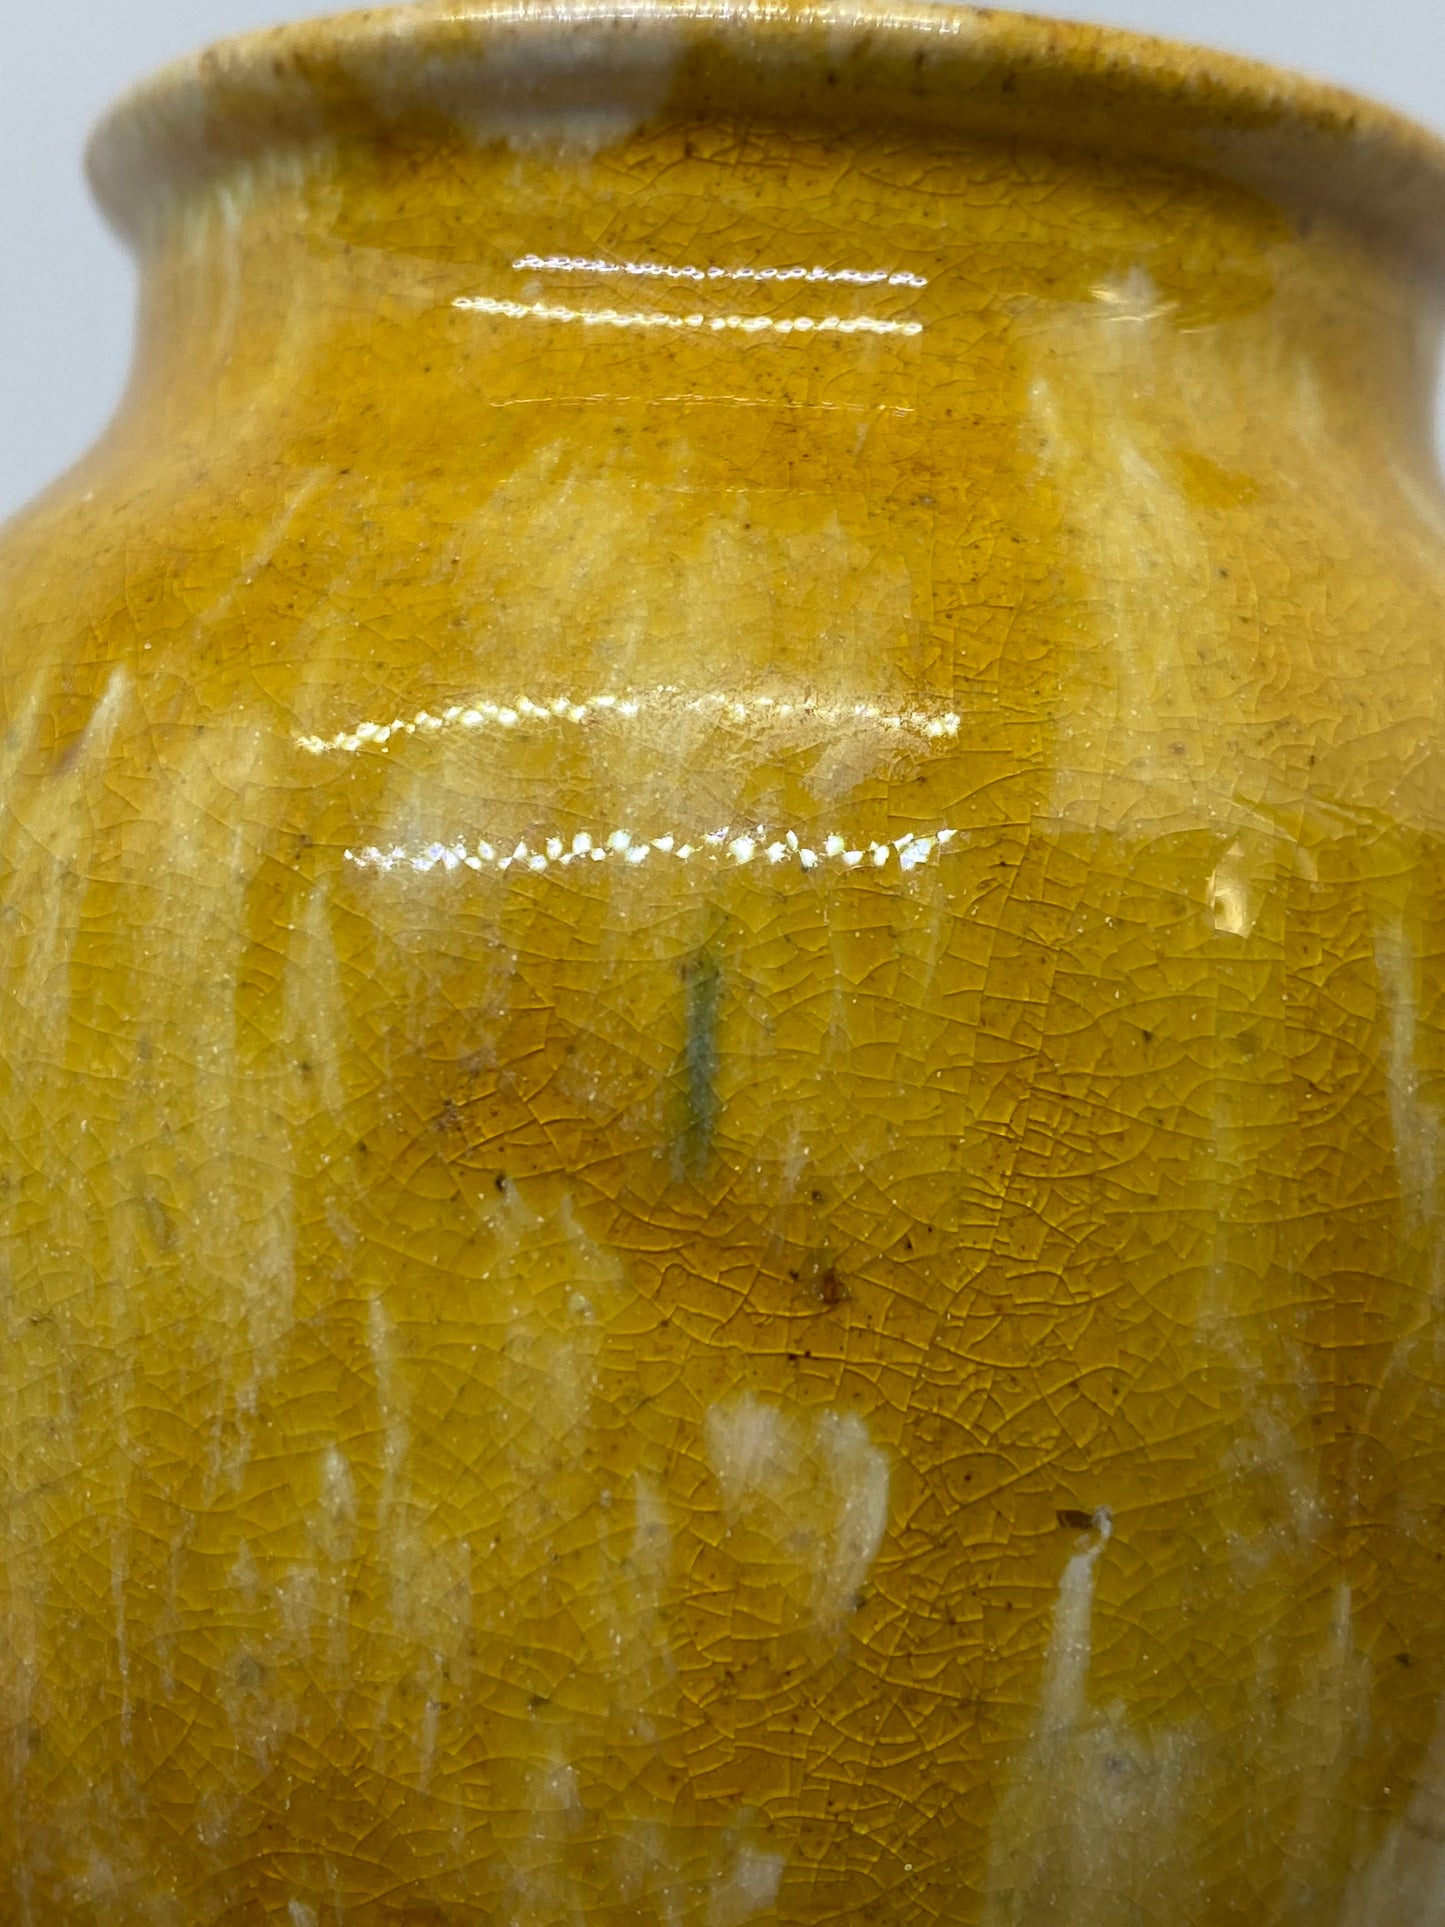 Unusually signed John Campbell 1932 Honey Yellow glazed vase - small